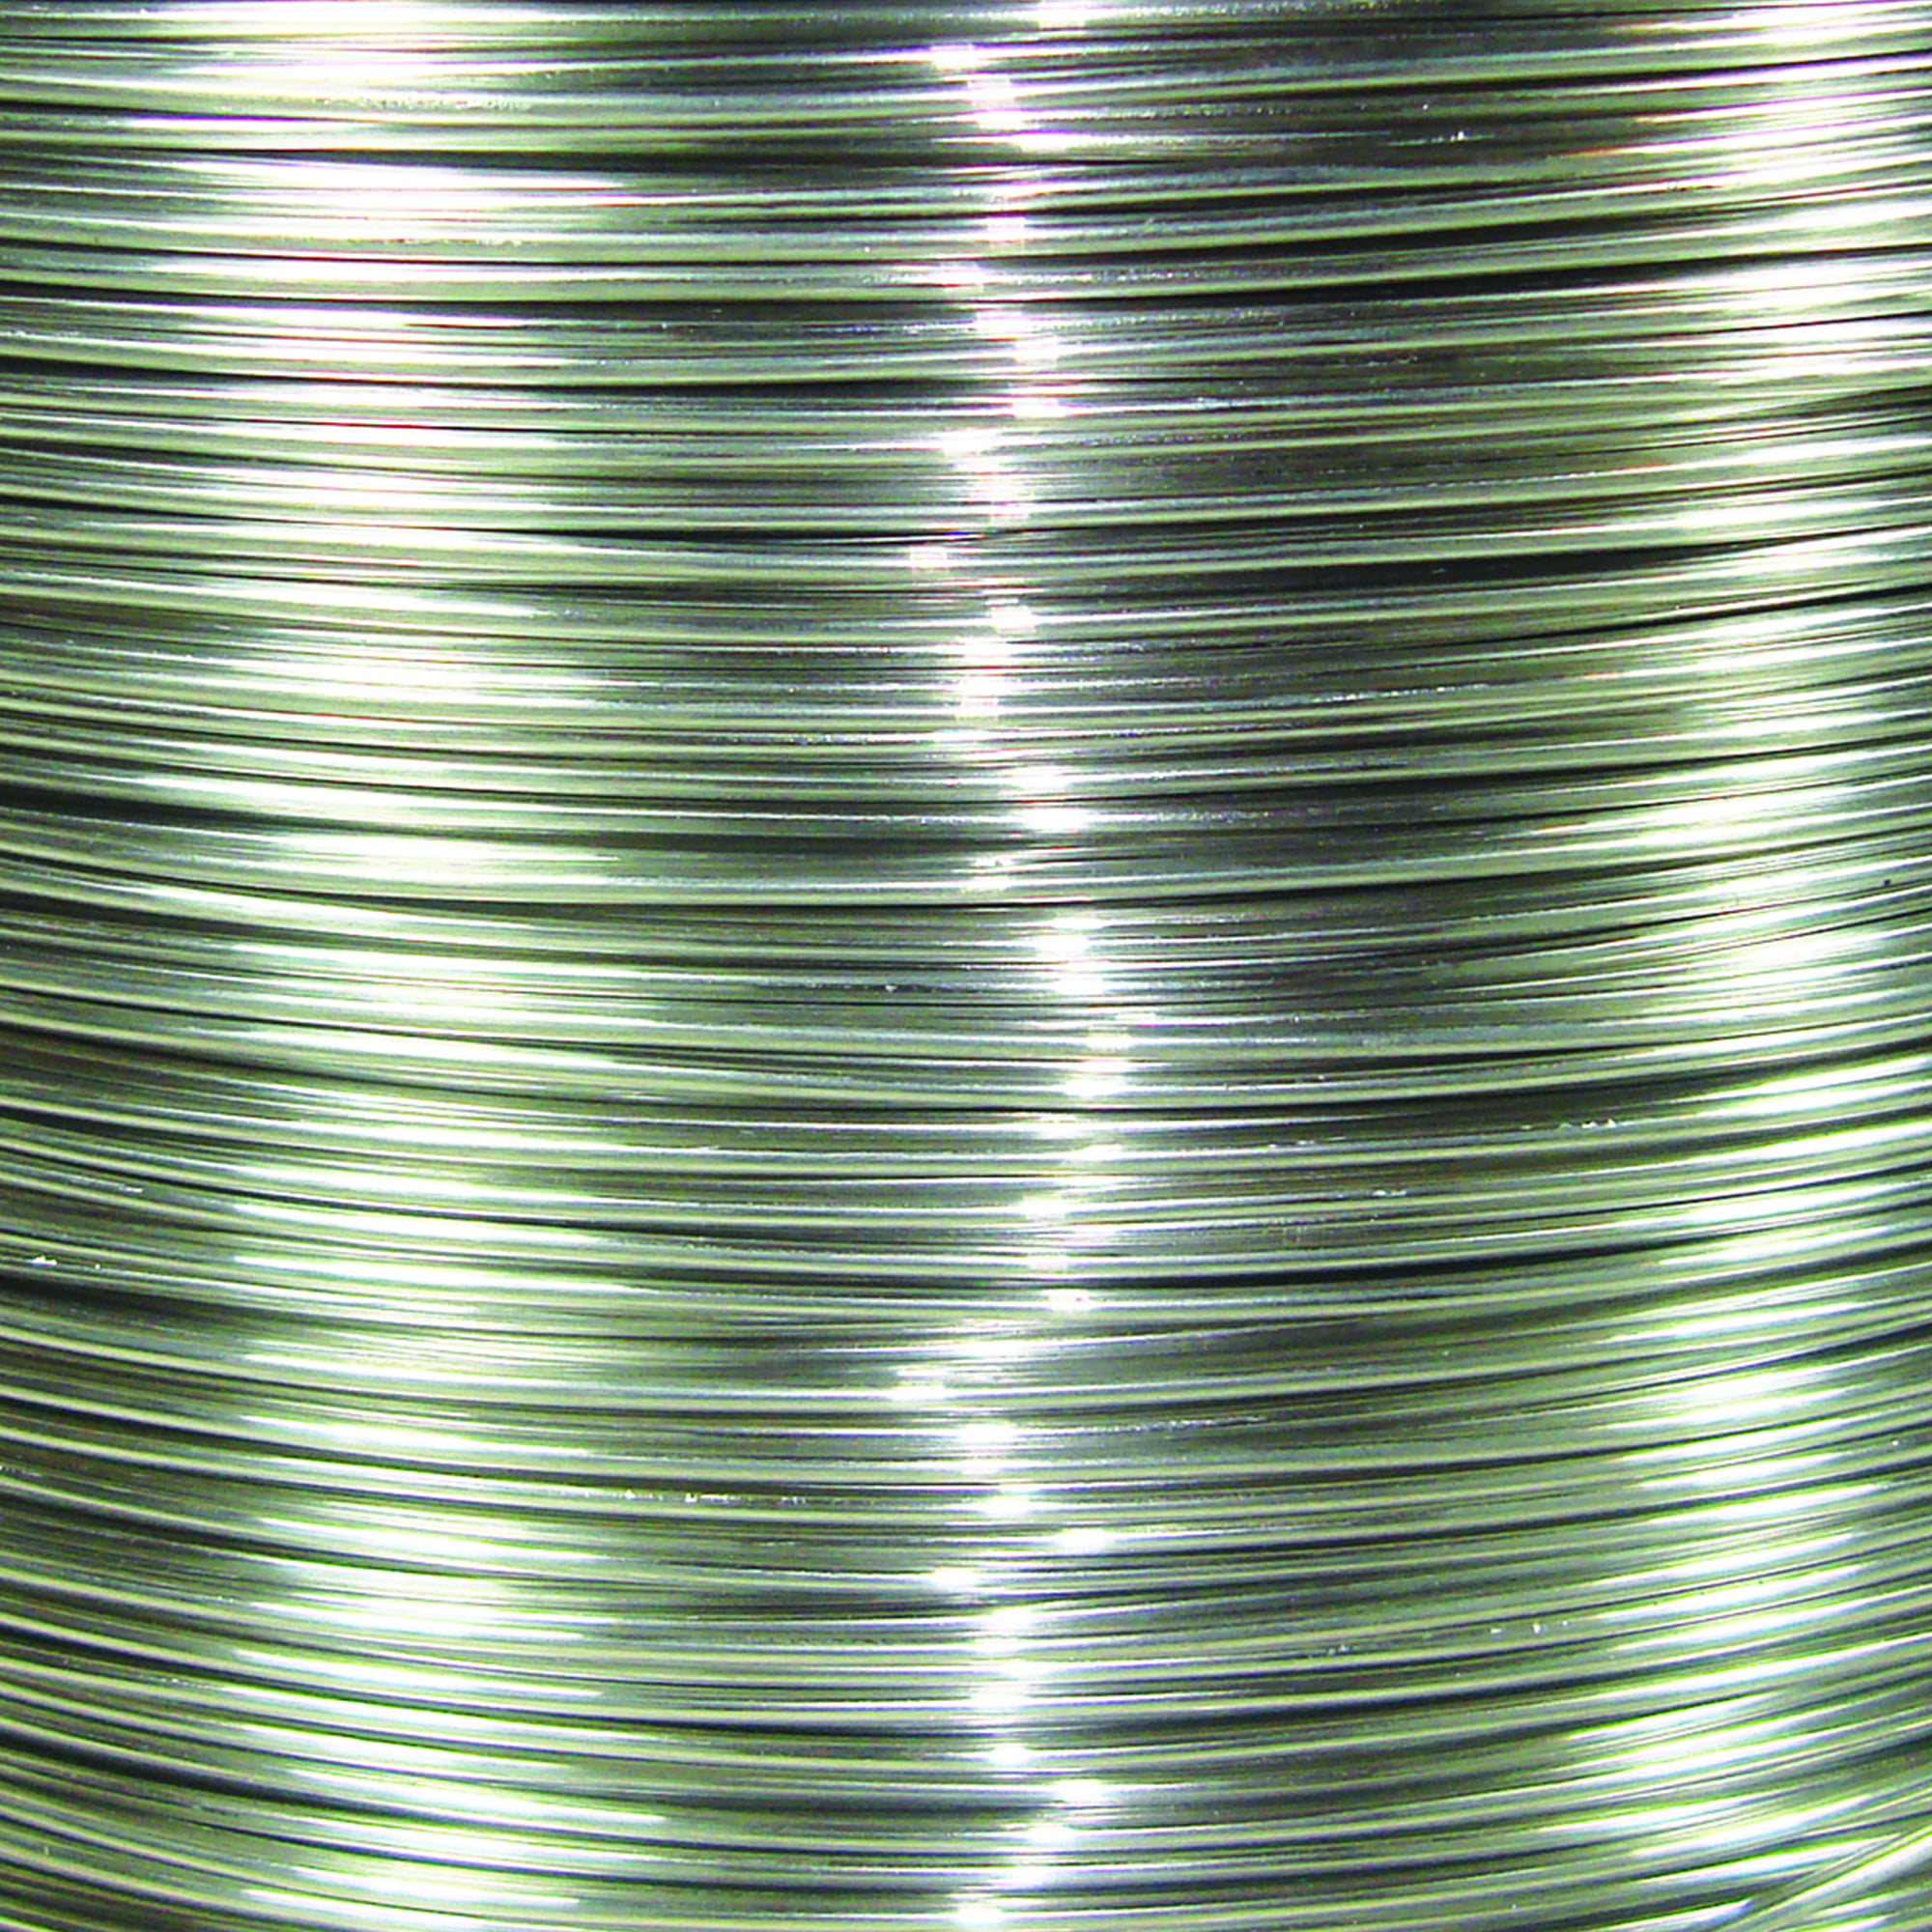 Aluminum Wire Details about   Field Guardian 12 1/2 GA 1 Mile 